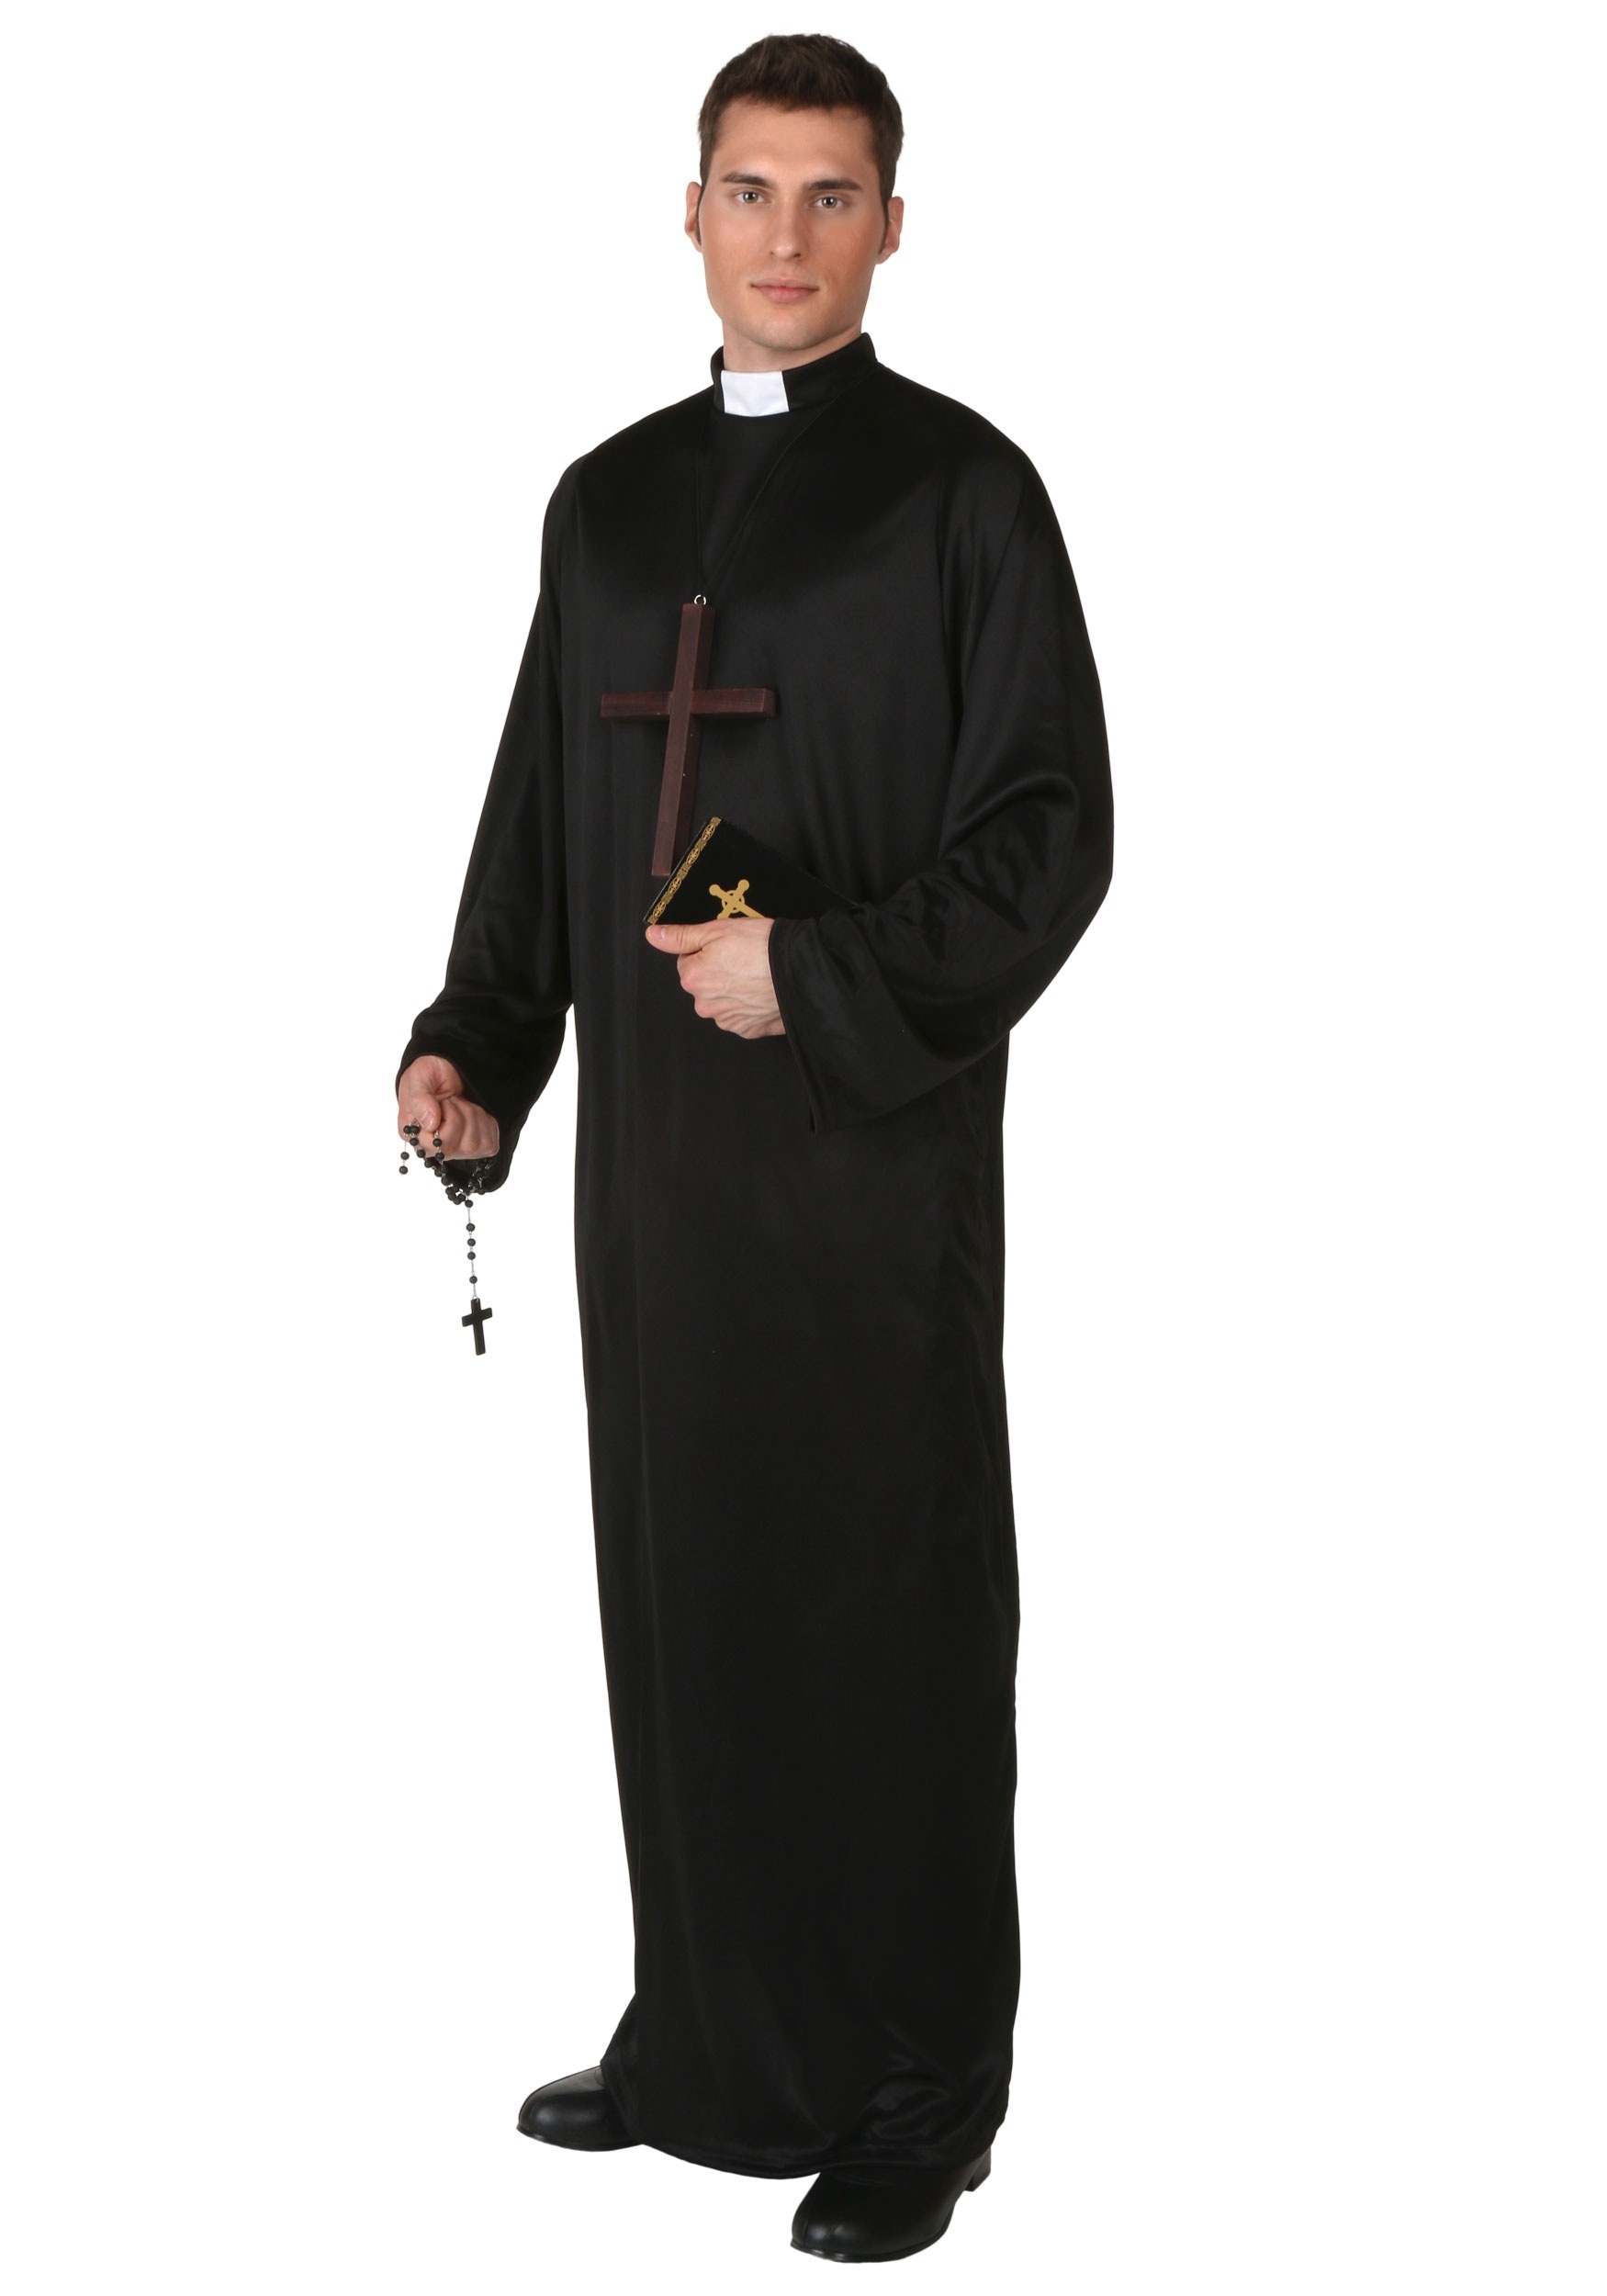 Plus Size Pious Priest Fancy Dress Costume , Religious Fancy Dress Costumes